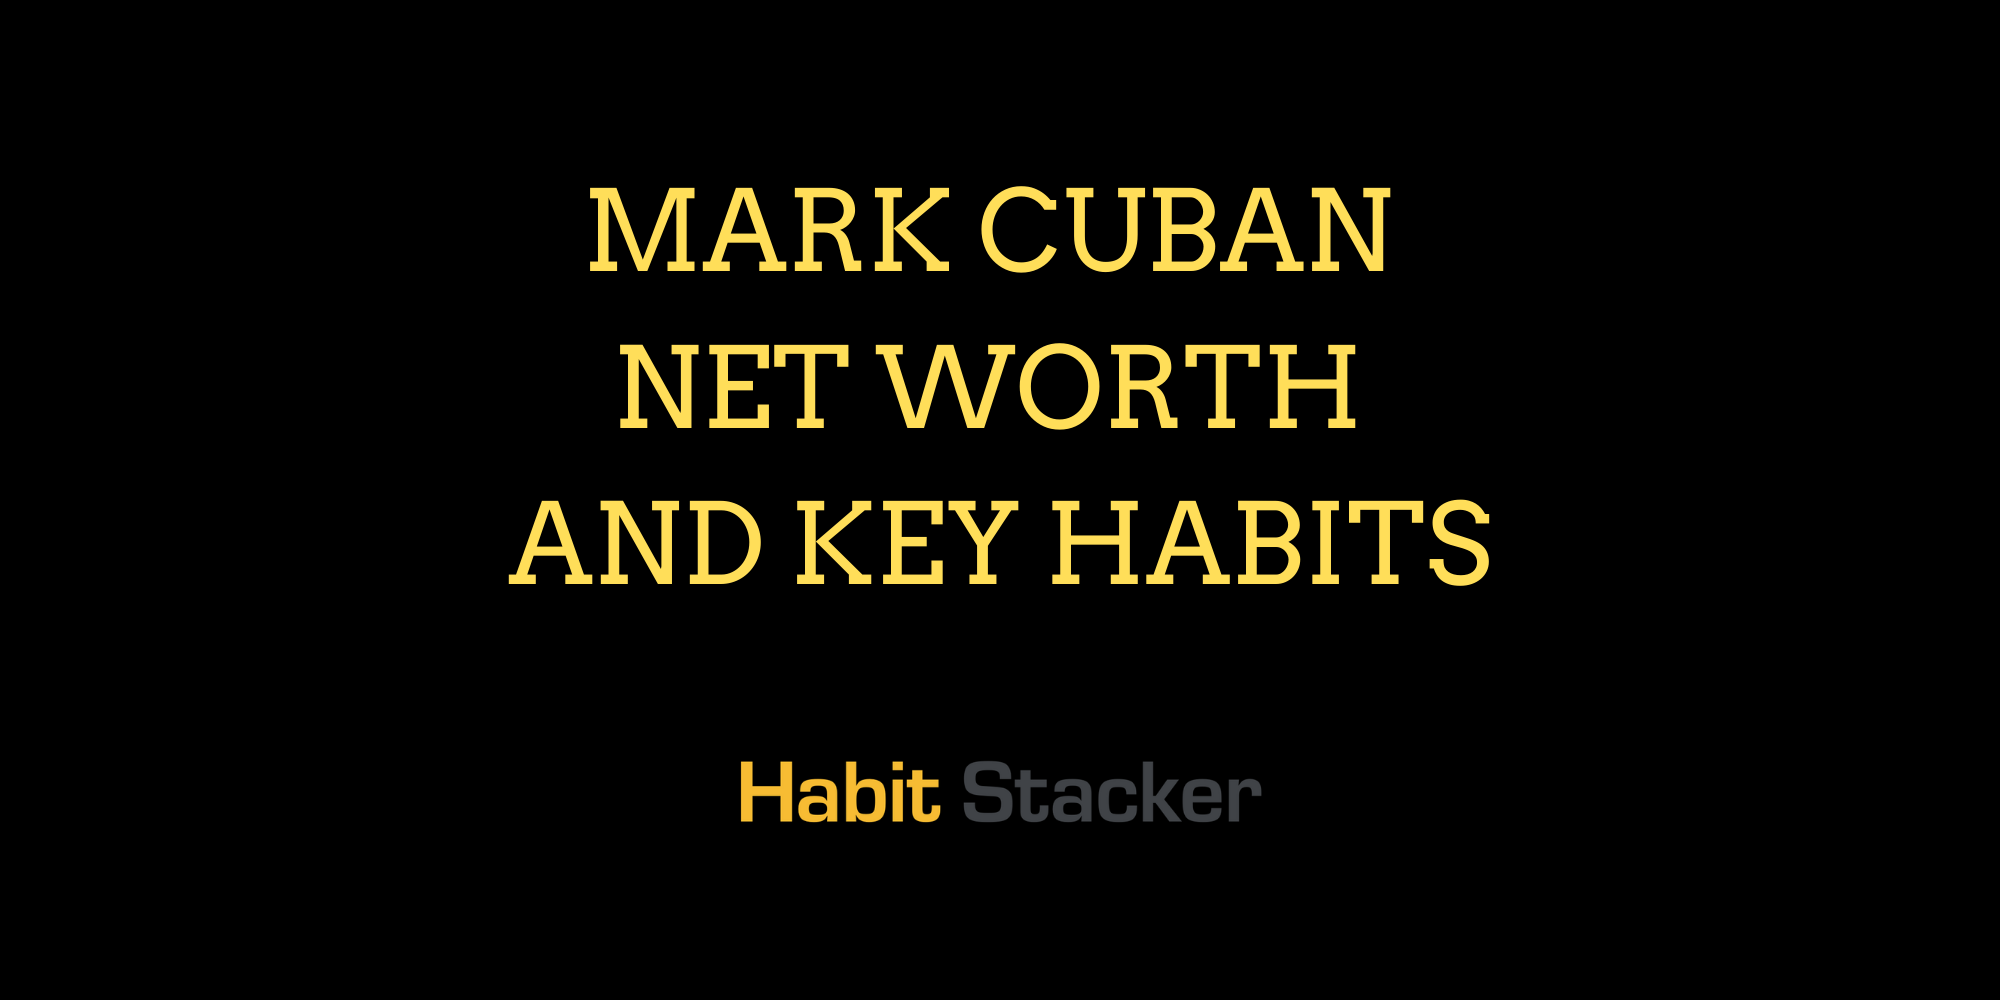 Mark Cuban Net Worth and Key Habits